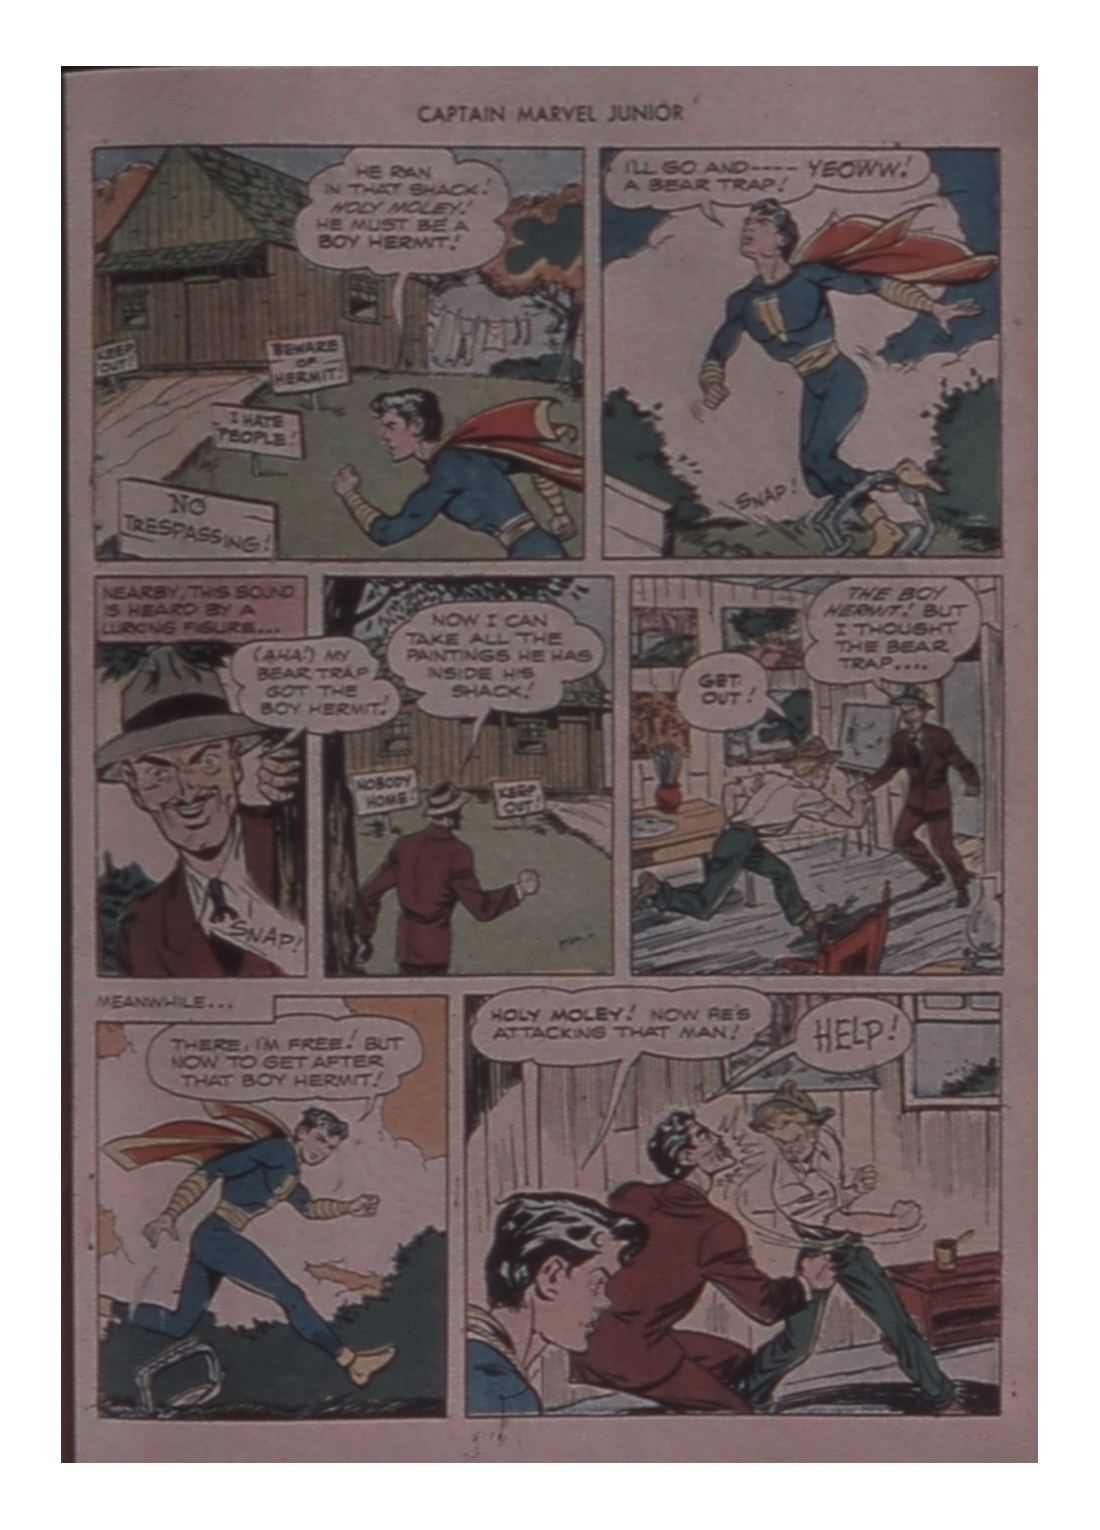 Read online Captain Marvel, Jr. comic -  Issue #59 - 43